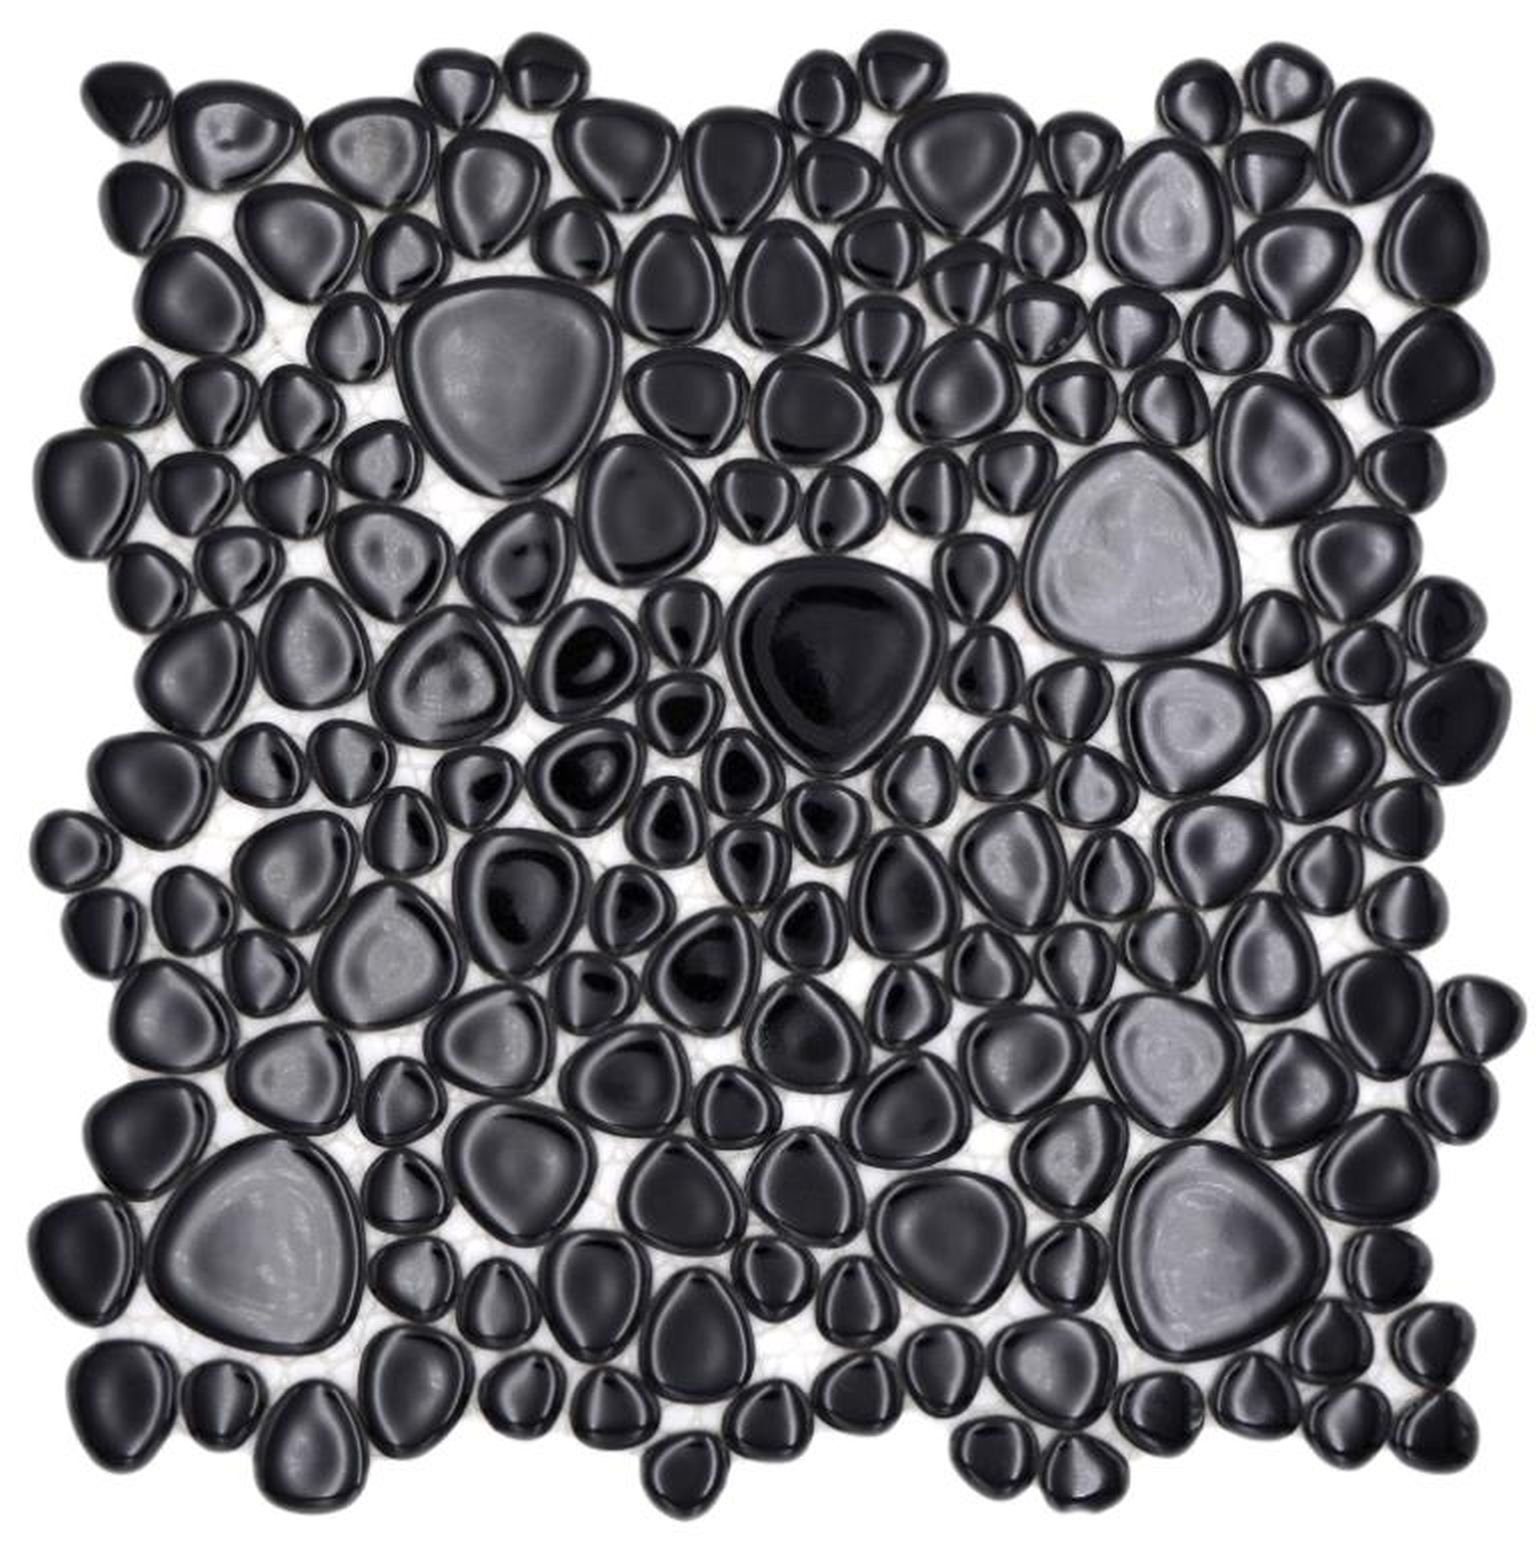 Mosani Mosaikfliesen Kieselmosaik Pebbles Keramikdrops schwarz glänzend Fliesenspiegel